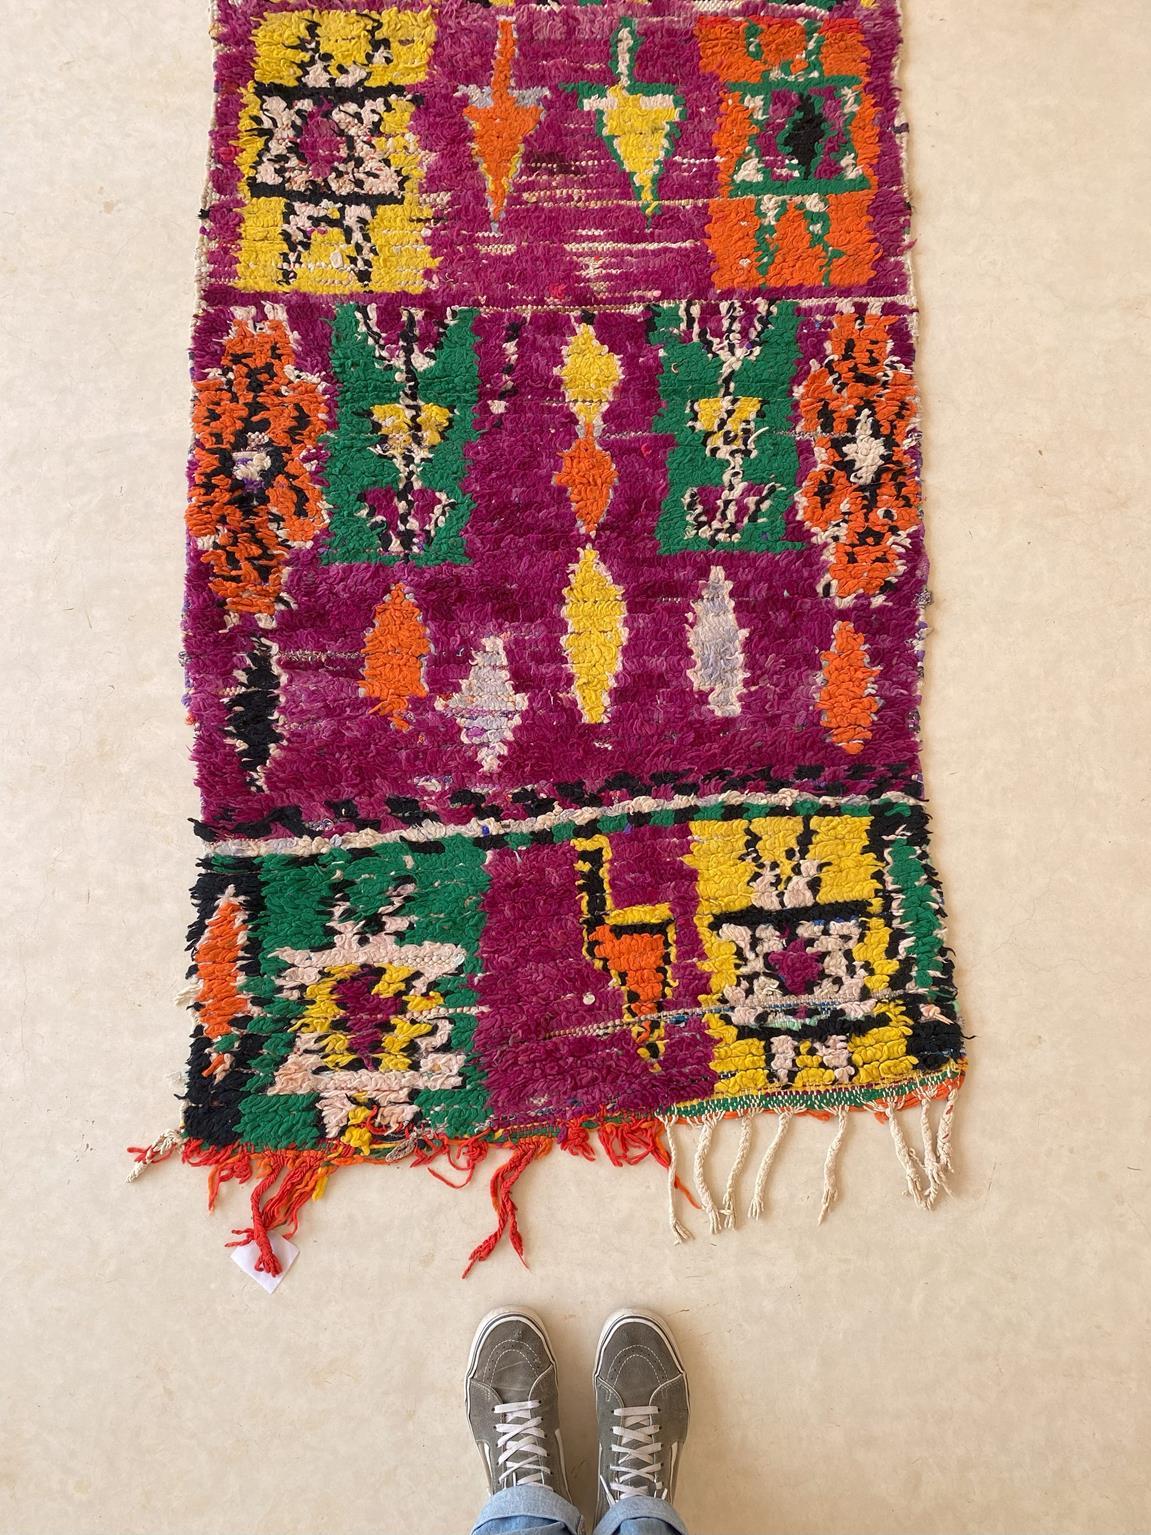 20th Century Vintage Moroccan runner rug - Purple/green/orange - 2.8x11.5feet / 87x352cm For Sale